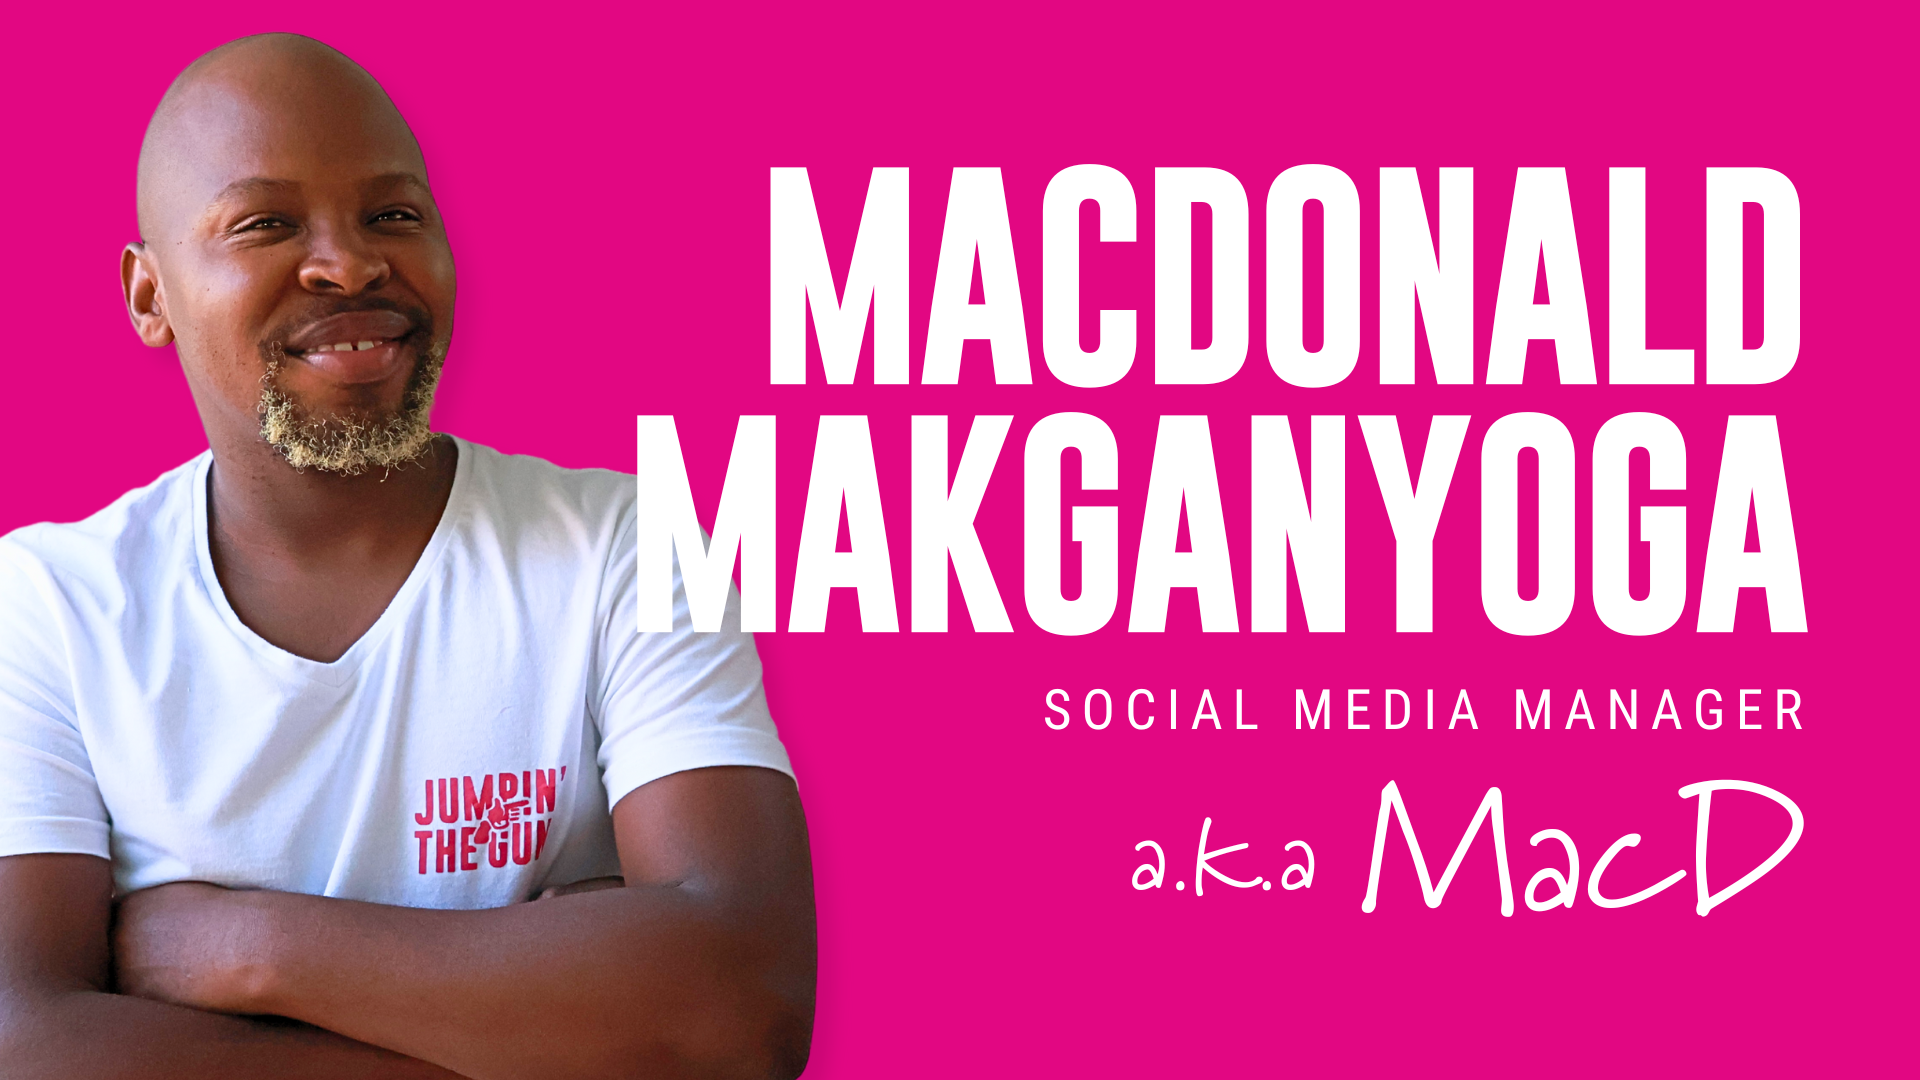 Jumpin' the Gun | Meet the Team: Macdonald Makganyoga